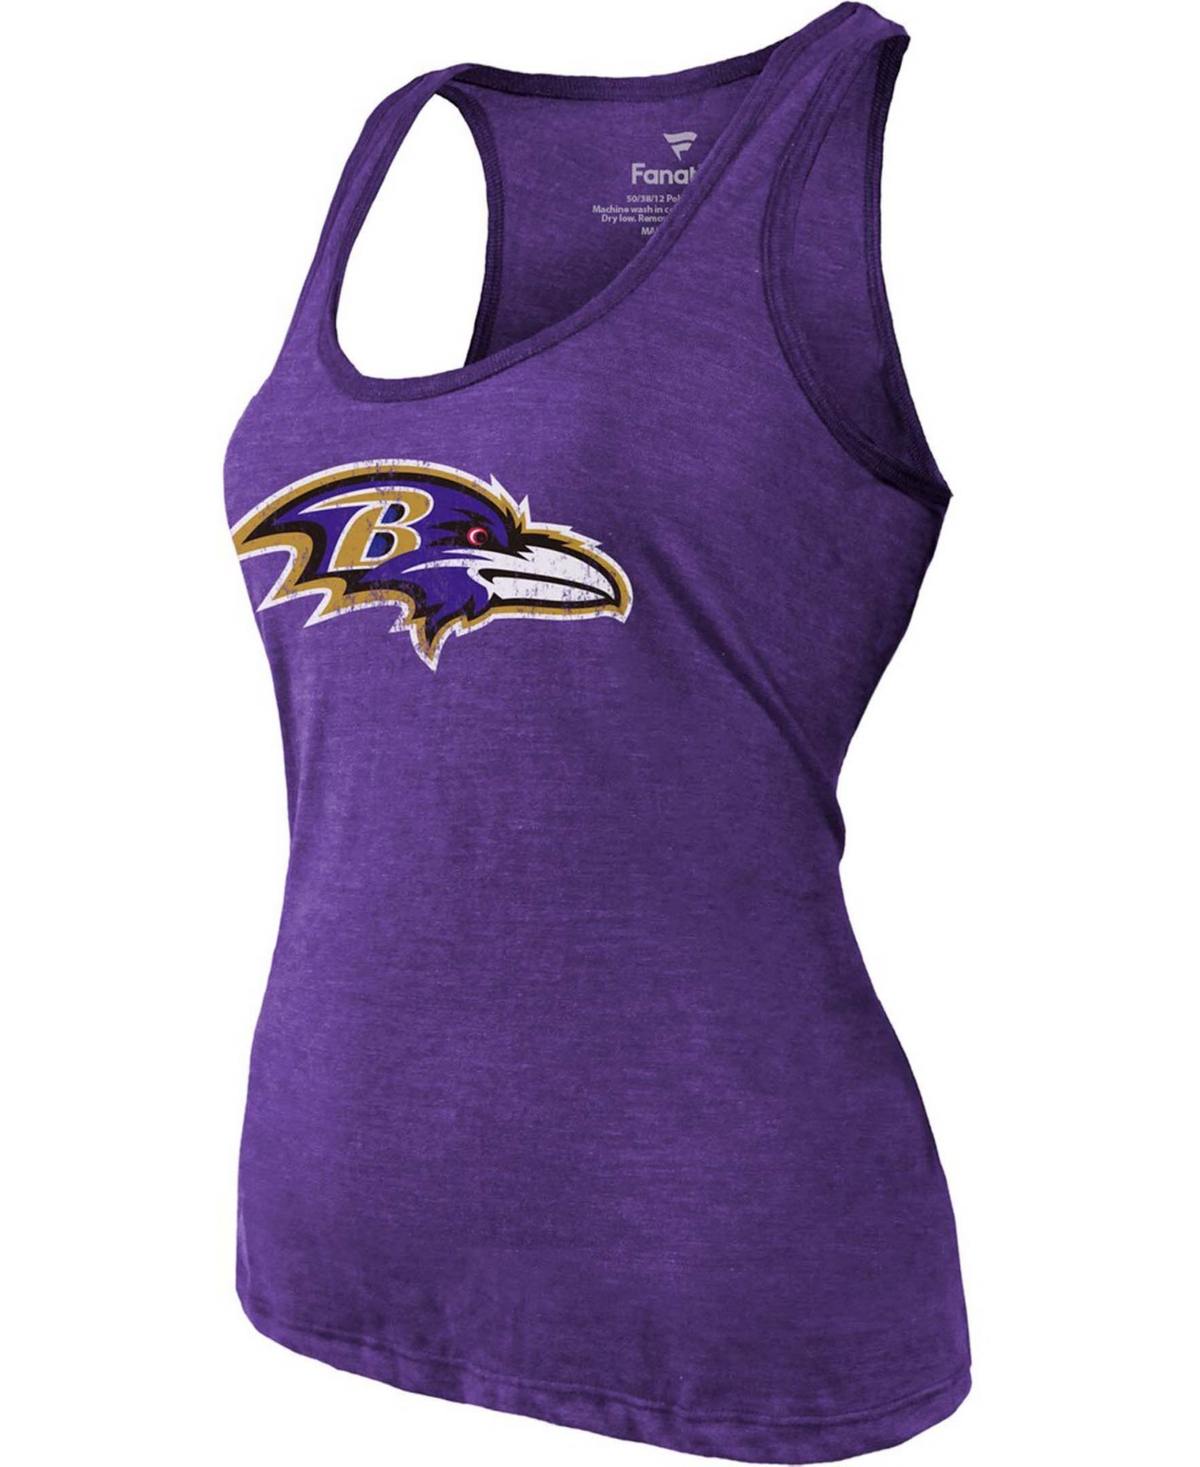 Shop Fanatics Women's Heathered Purple Baltimore Ravens Name Number Tri-blend Tank Top